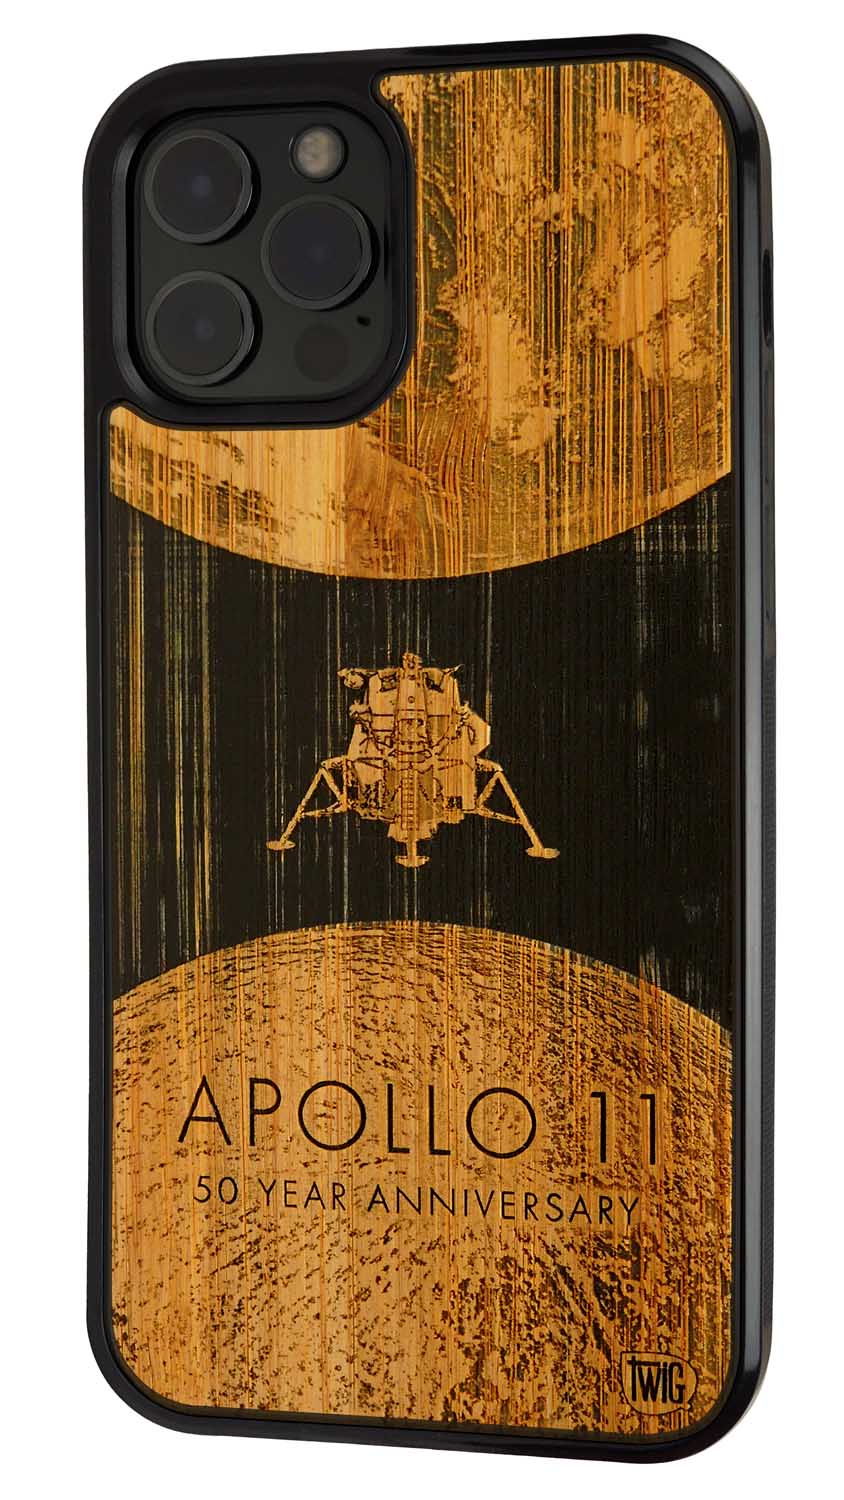 Apollo 11 - Bamboo iPhone Case, iPhone Case - Twig Case Co.